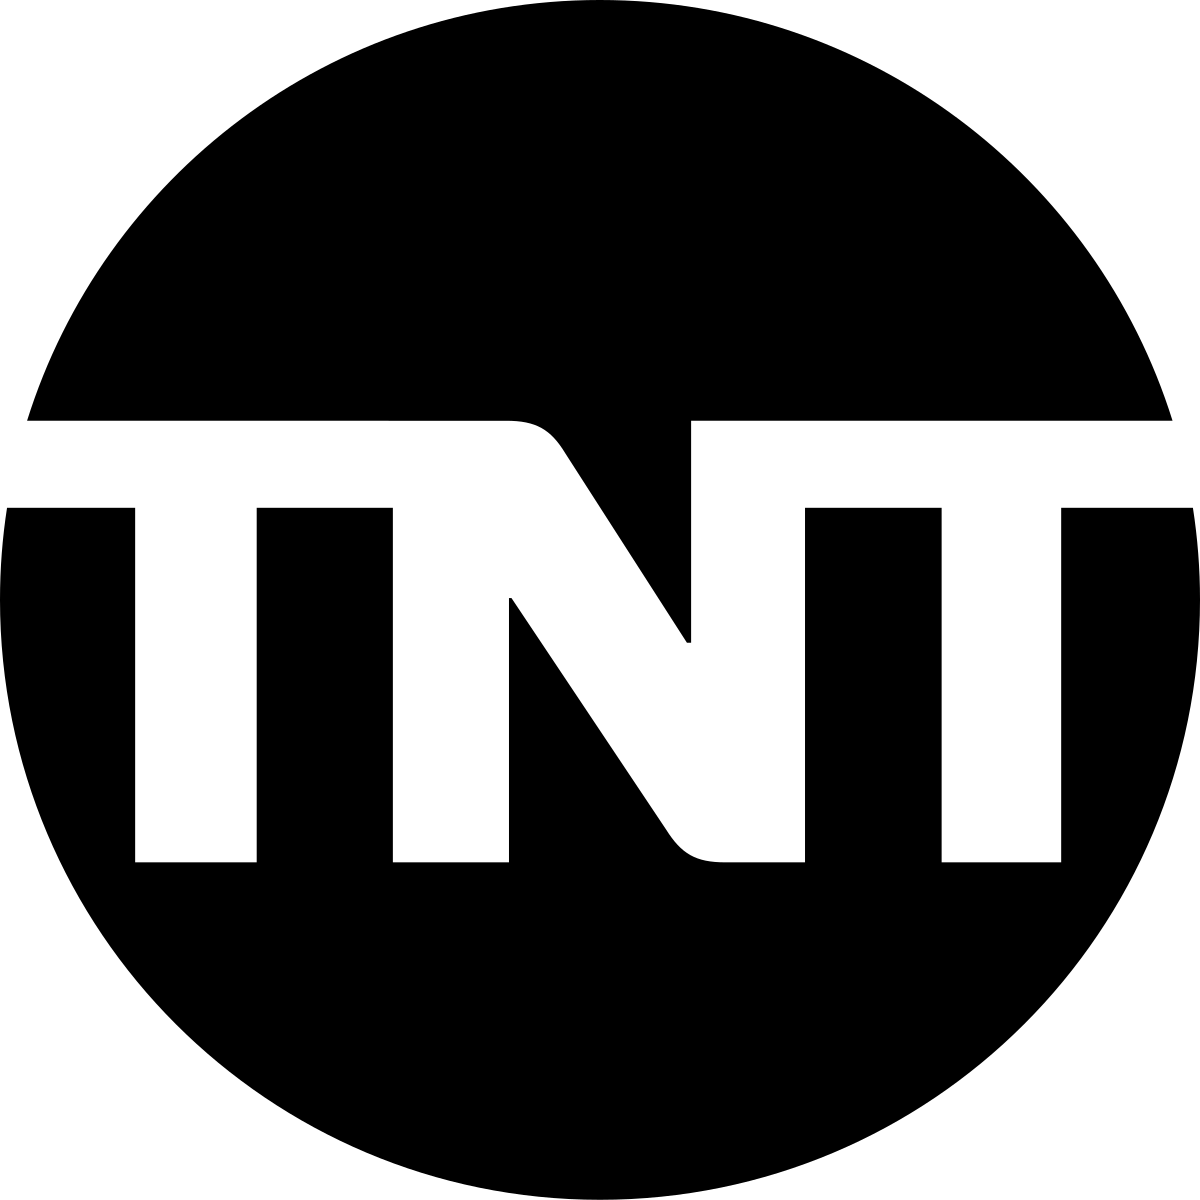 American Cable Television Company Logo - TNT (U.S. TV network)